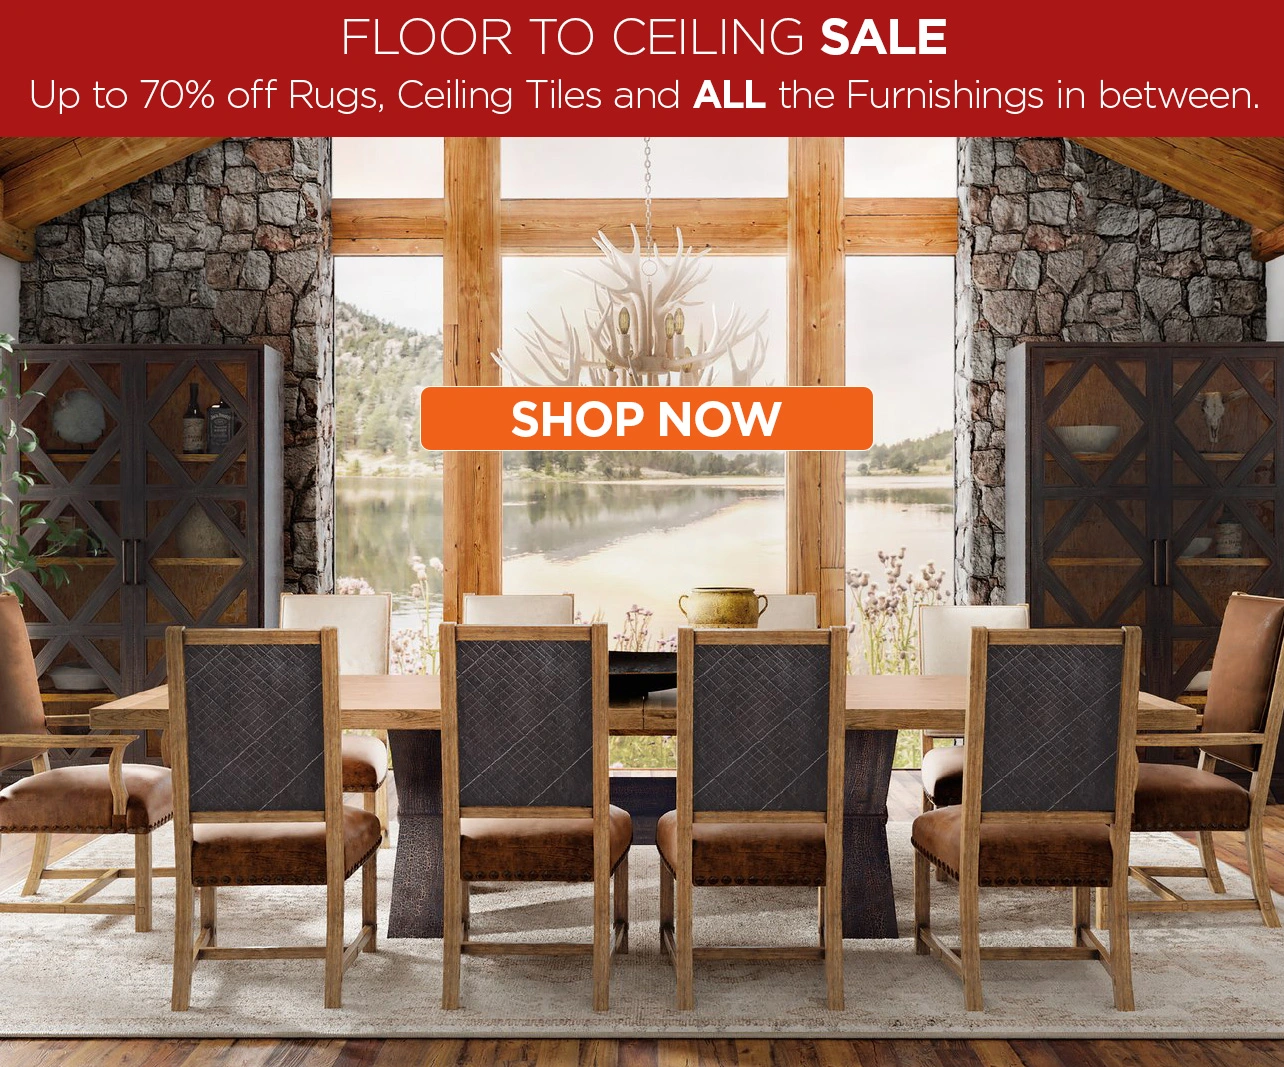 Homethreads Floor to Ceiling Sale